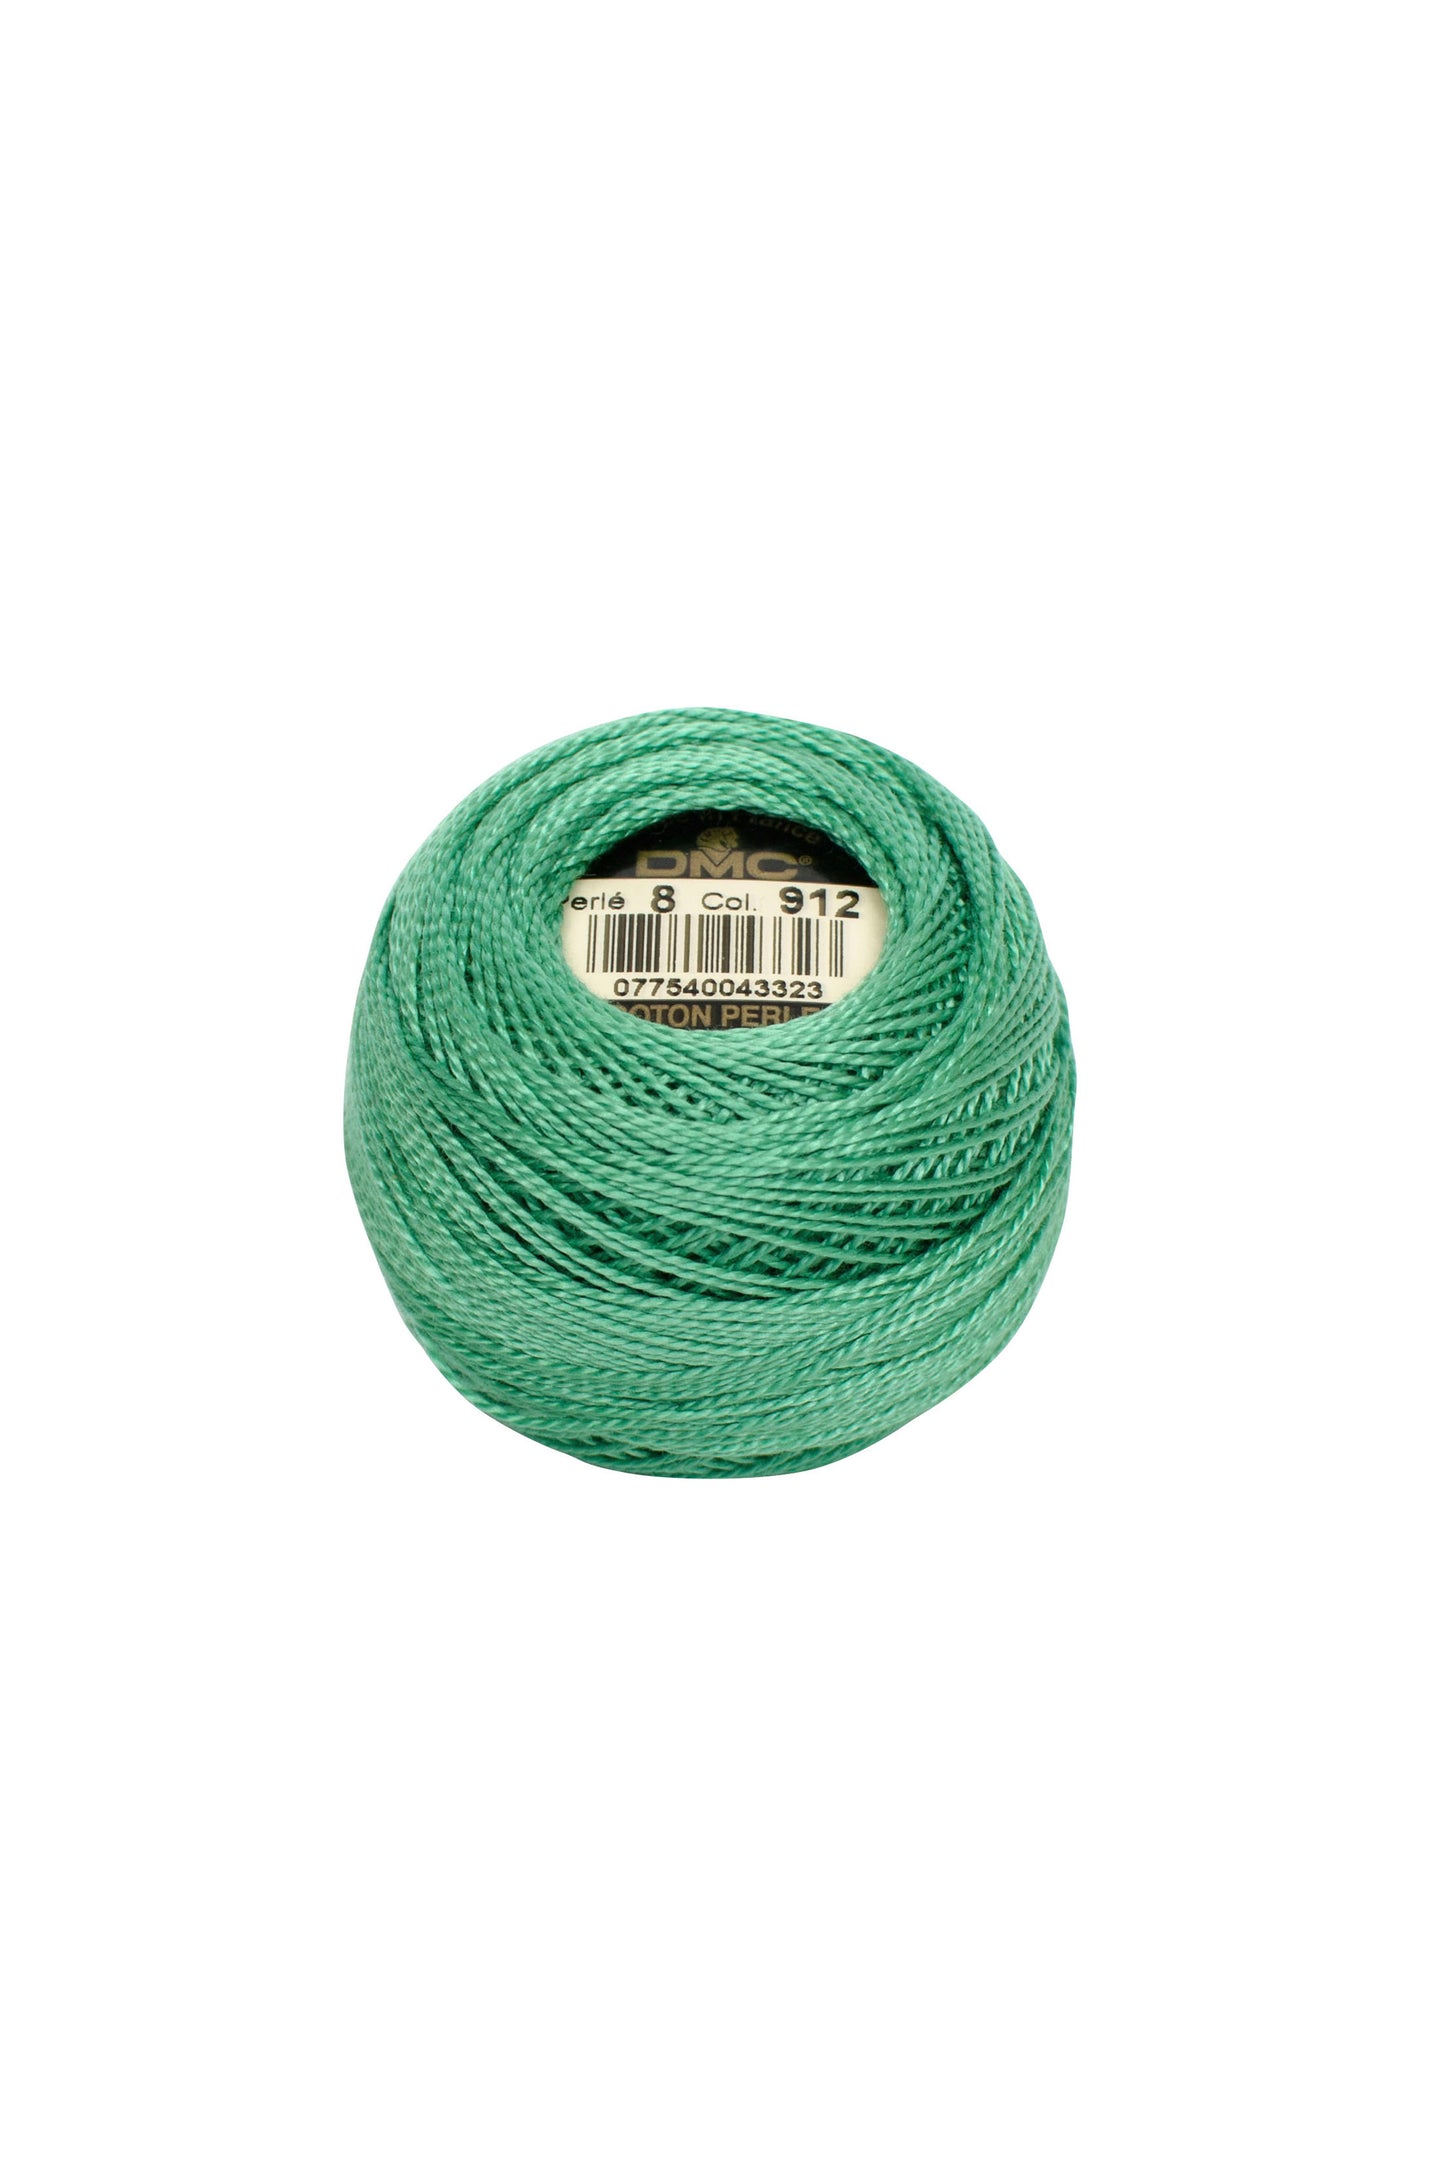 912 Light Emerald Green - DMC #8 Perle Cotton Ball